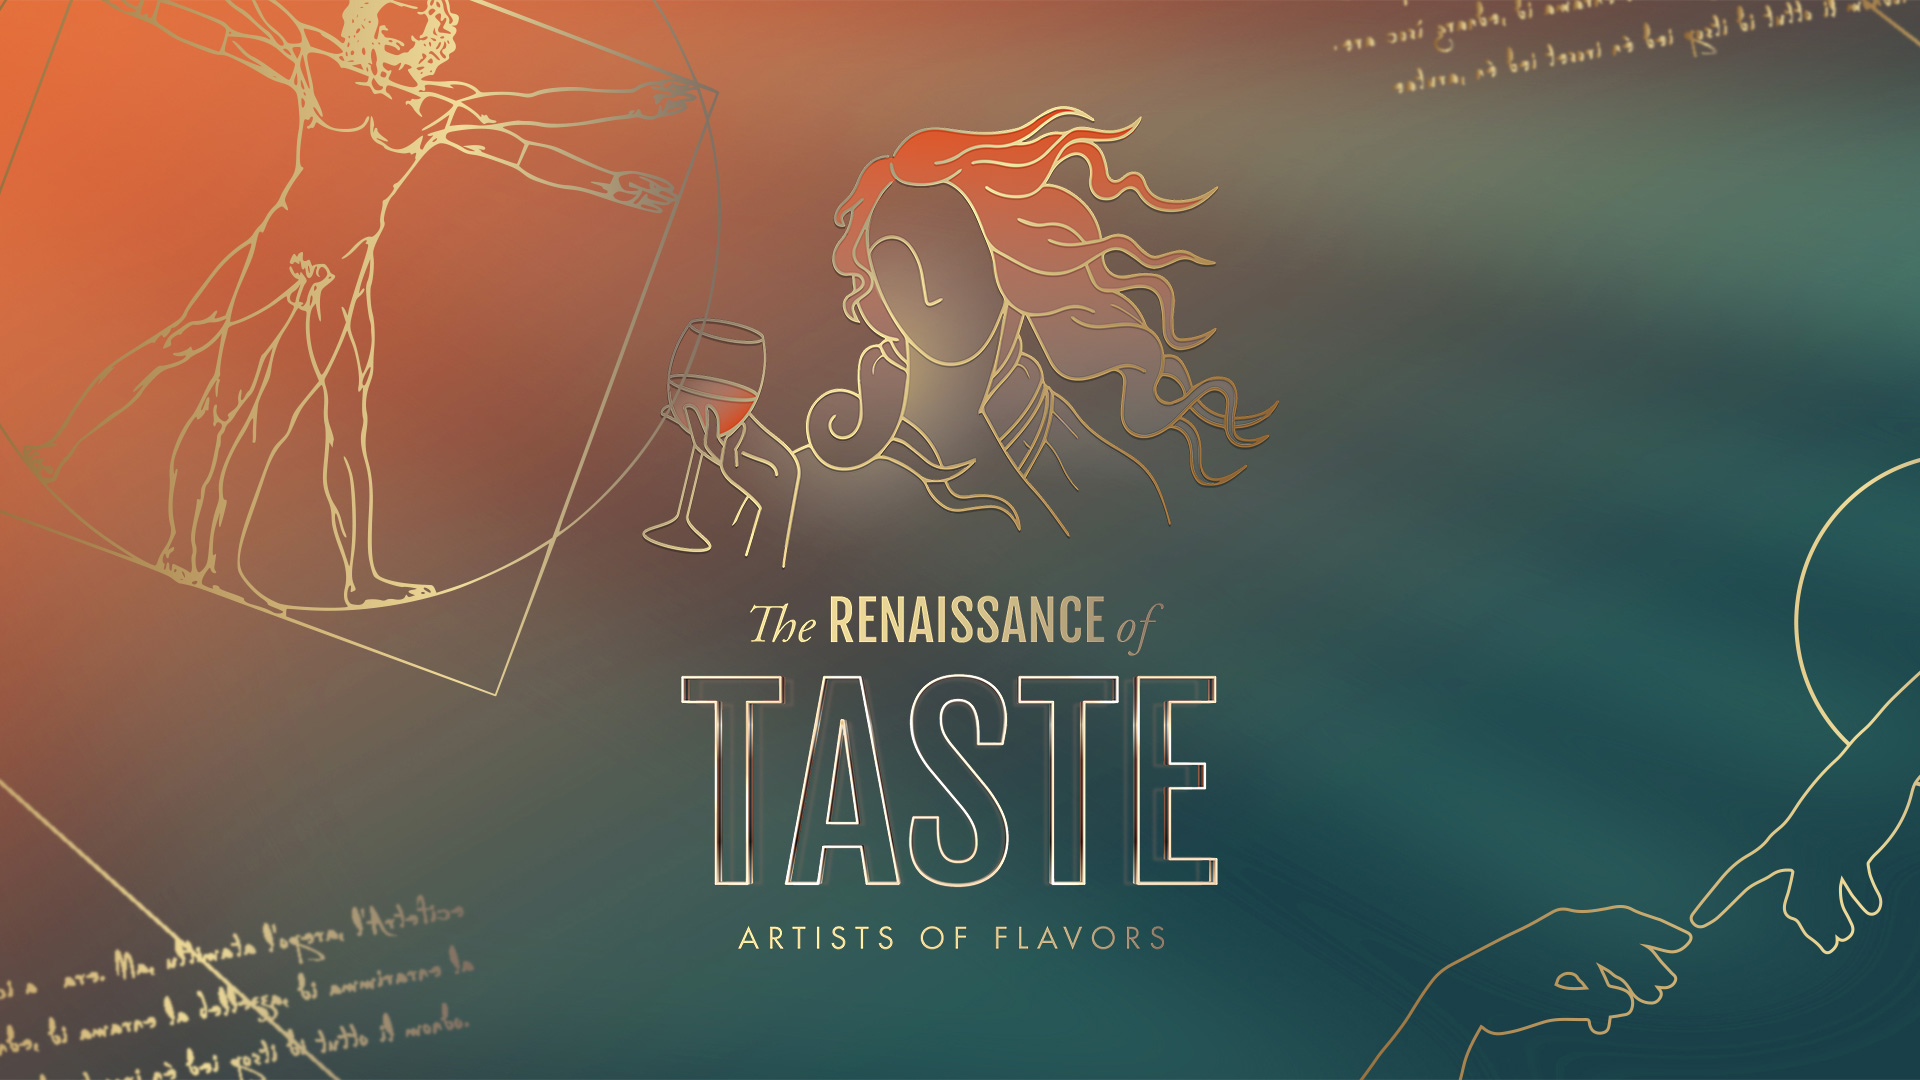 The renaissance of taste f/w - CQ Agency